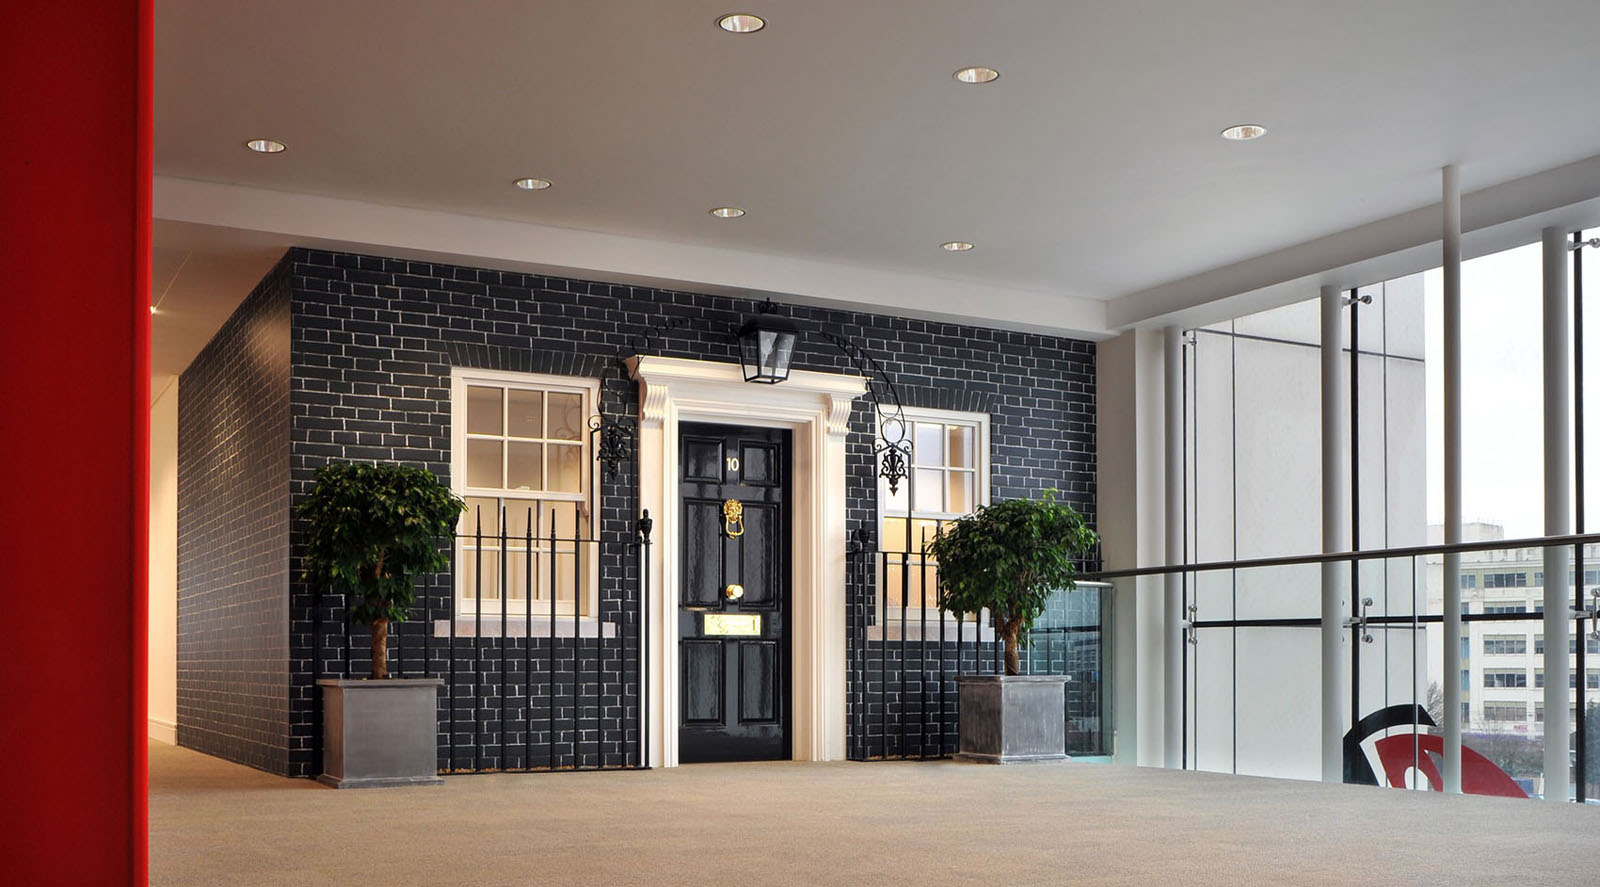 Inspiring British Office Interior Design At Rackspace | iDesignArch